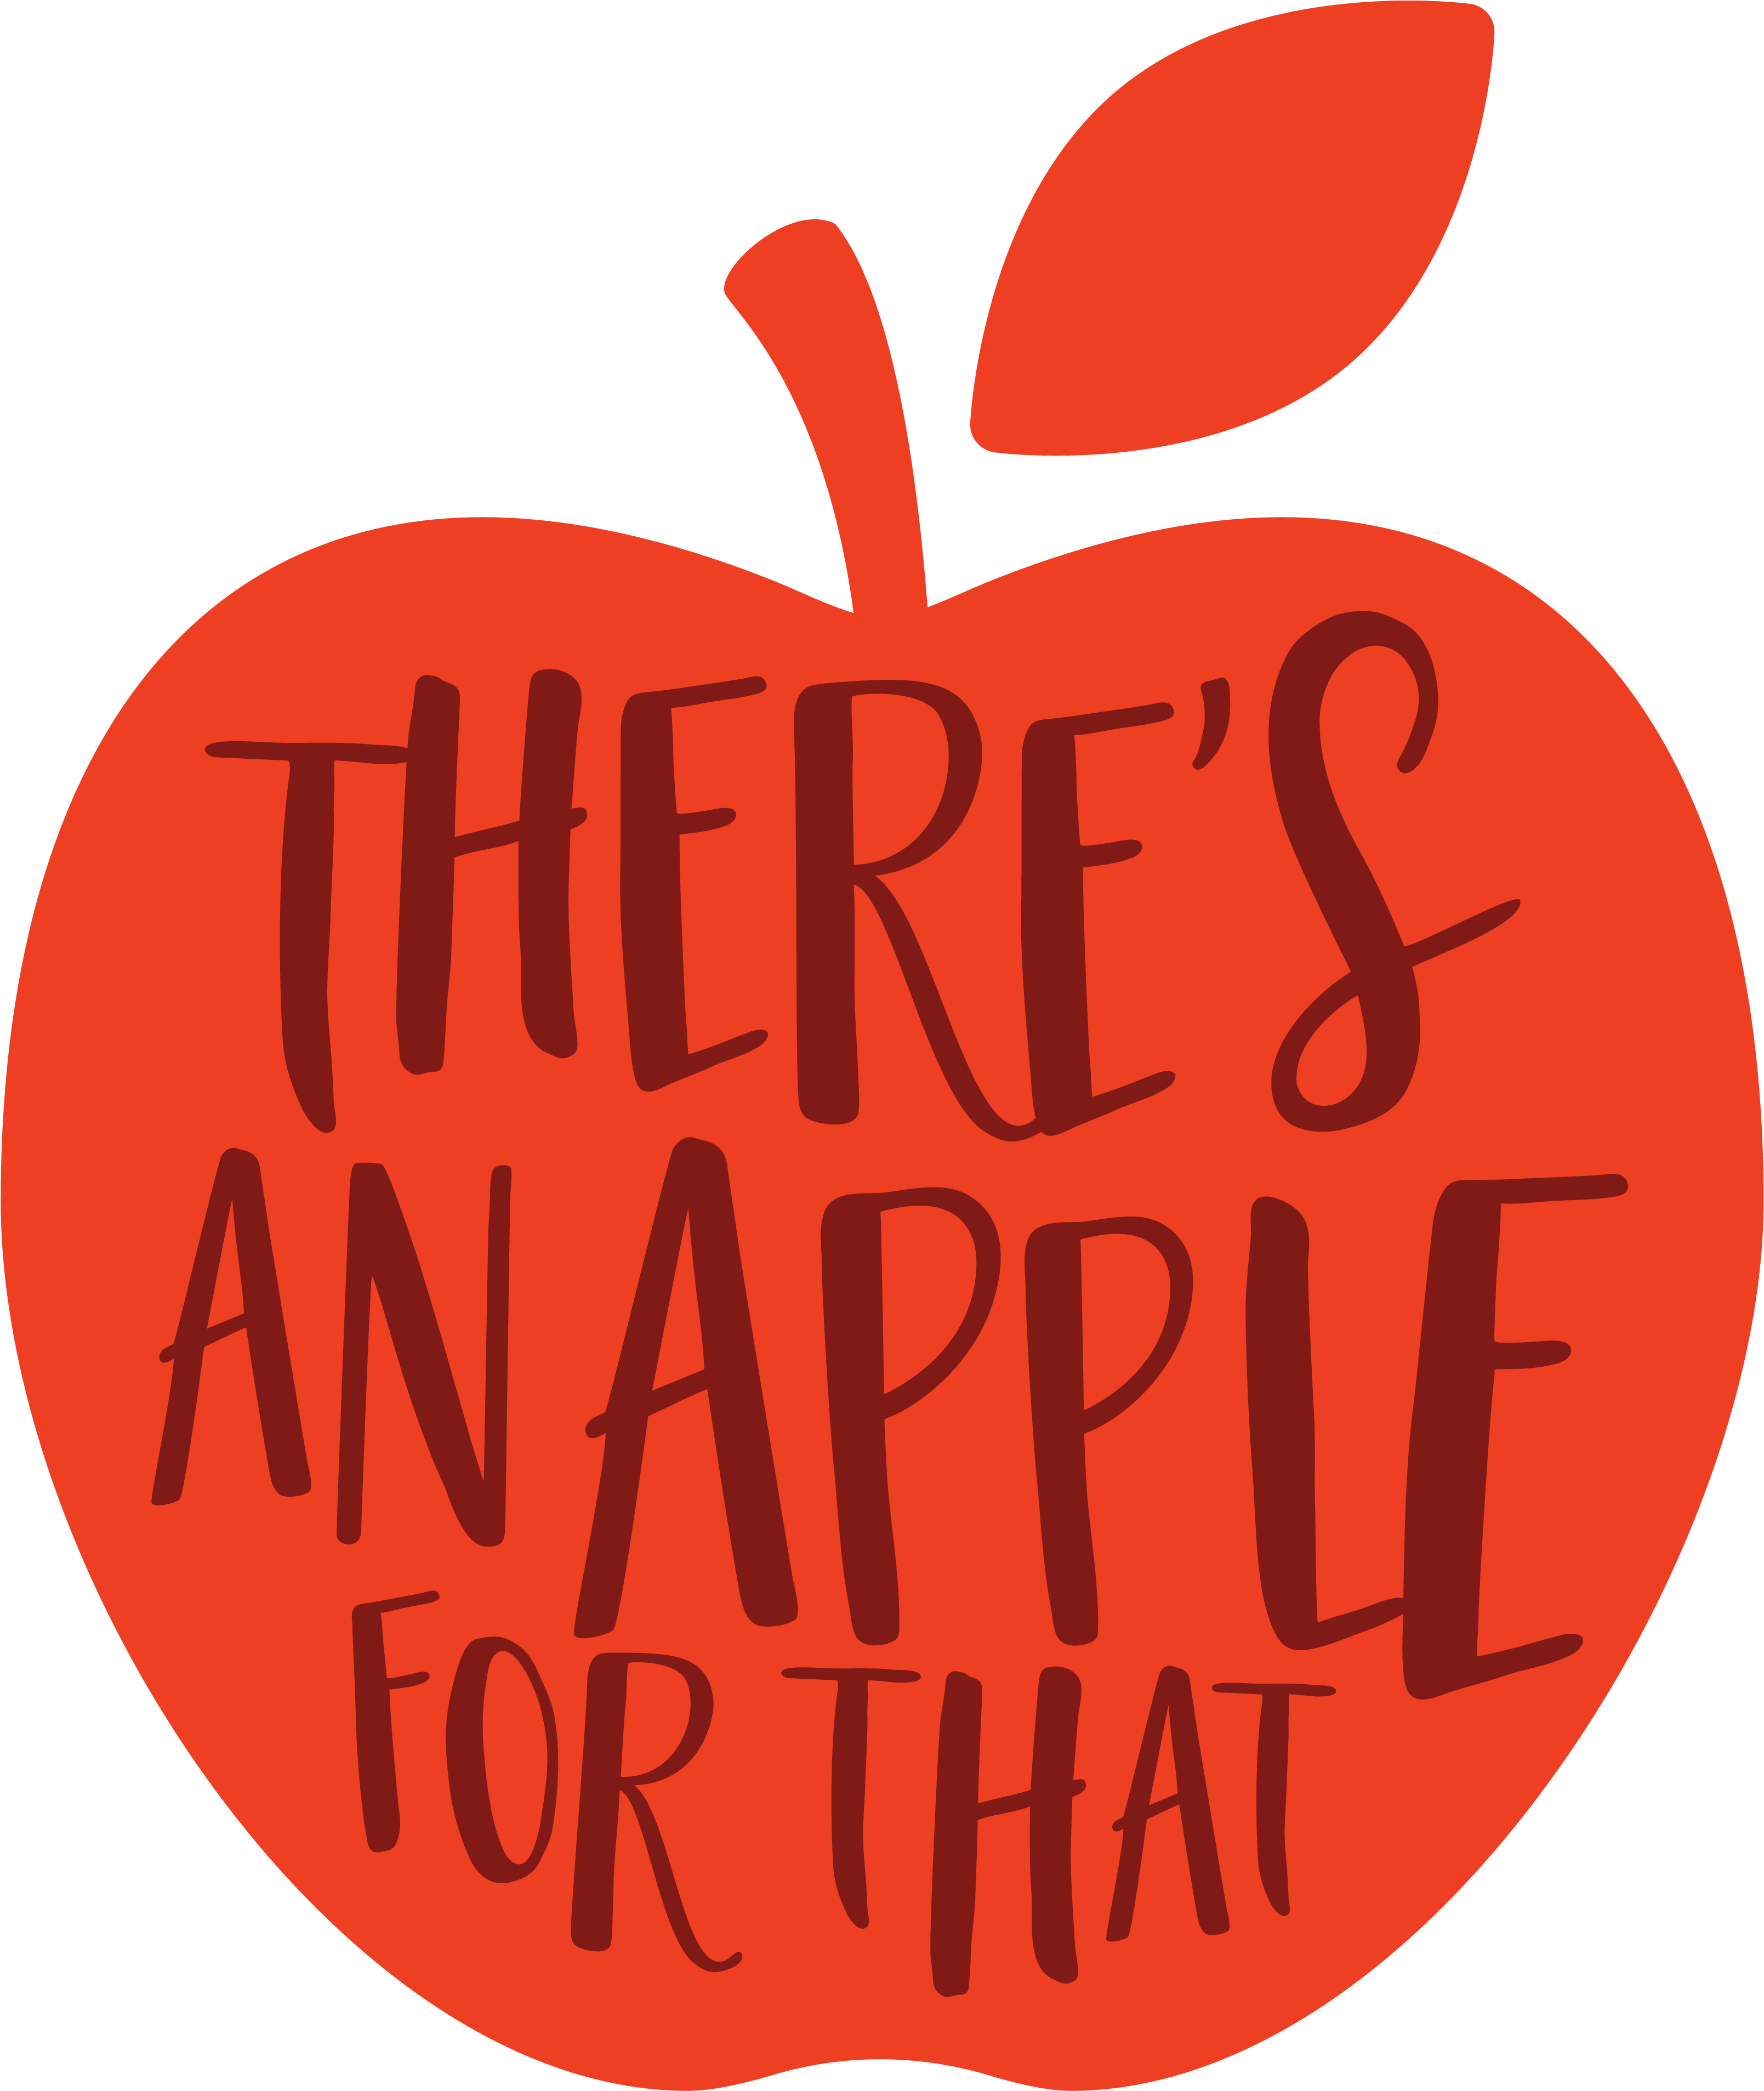 Classic Apple Pie - Apple (4167x4167)